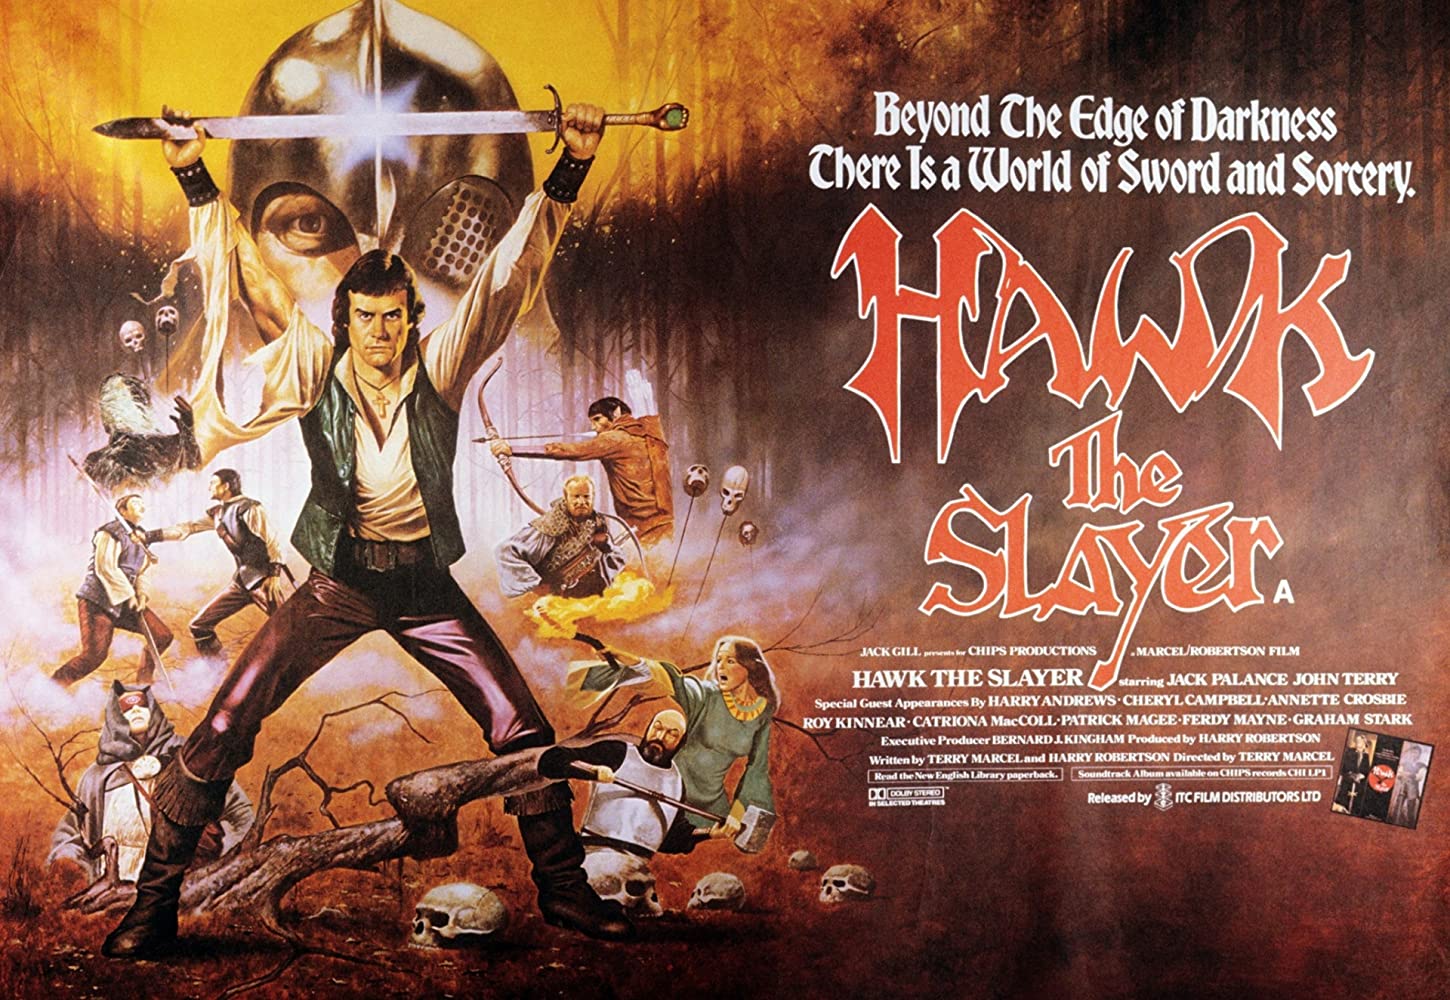 Hawk the Slayer - (1980 movie) image